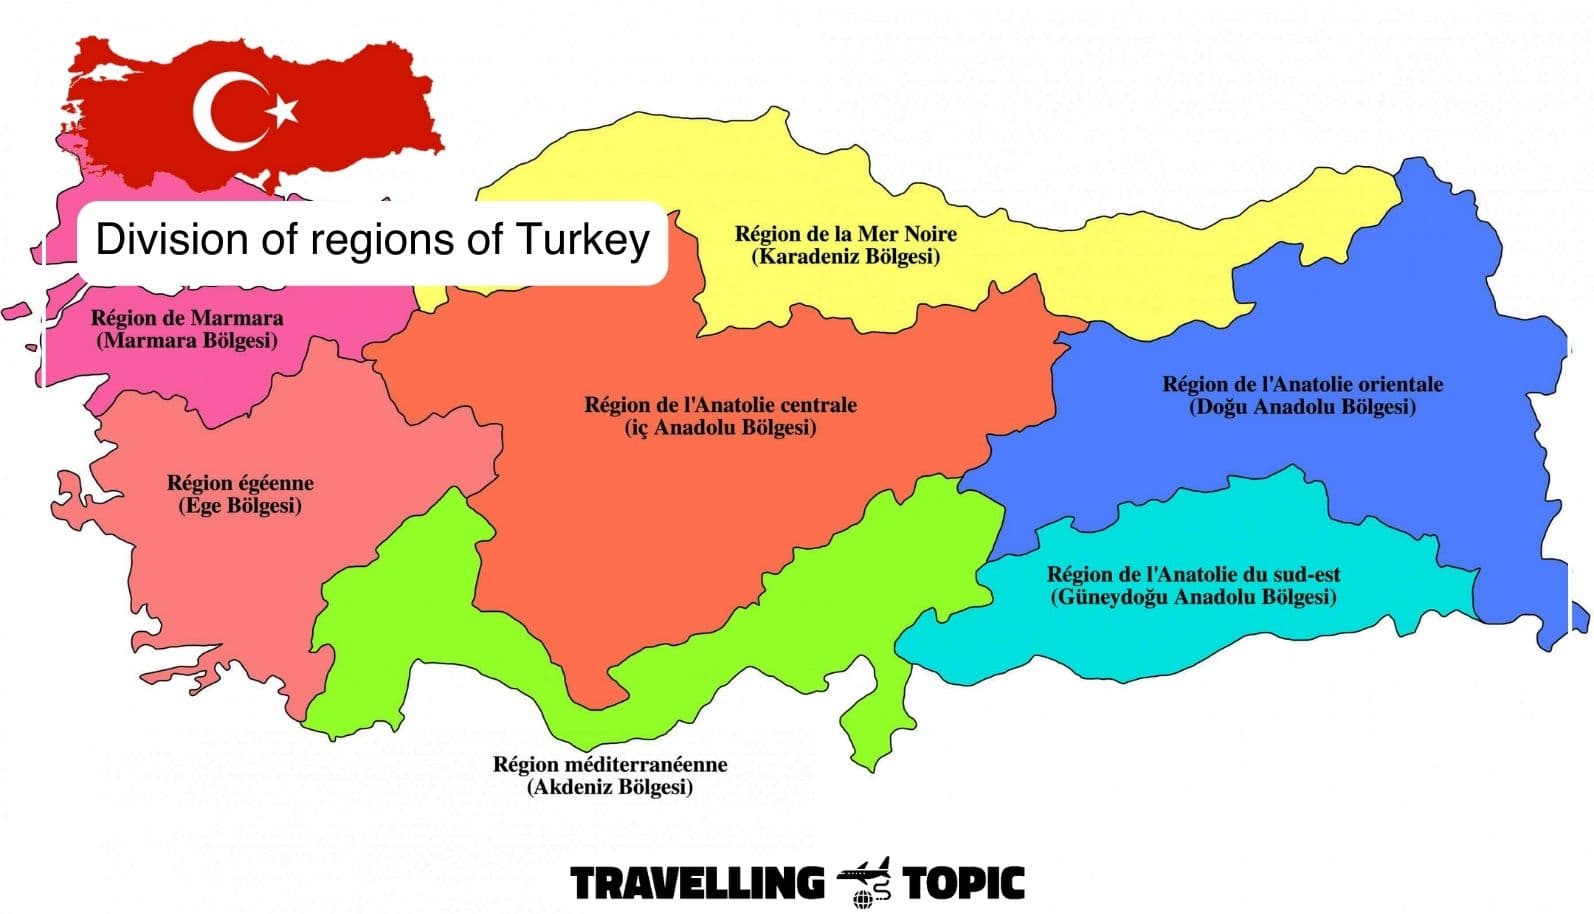 Division of regions of Turkey